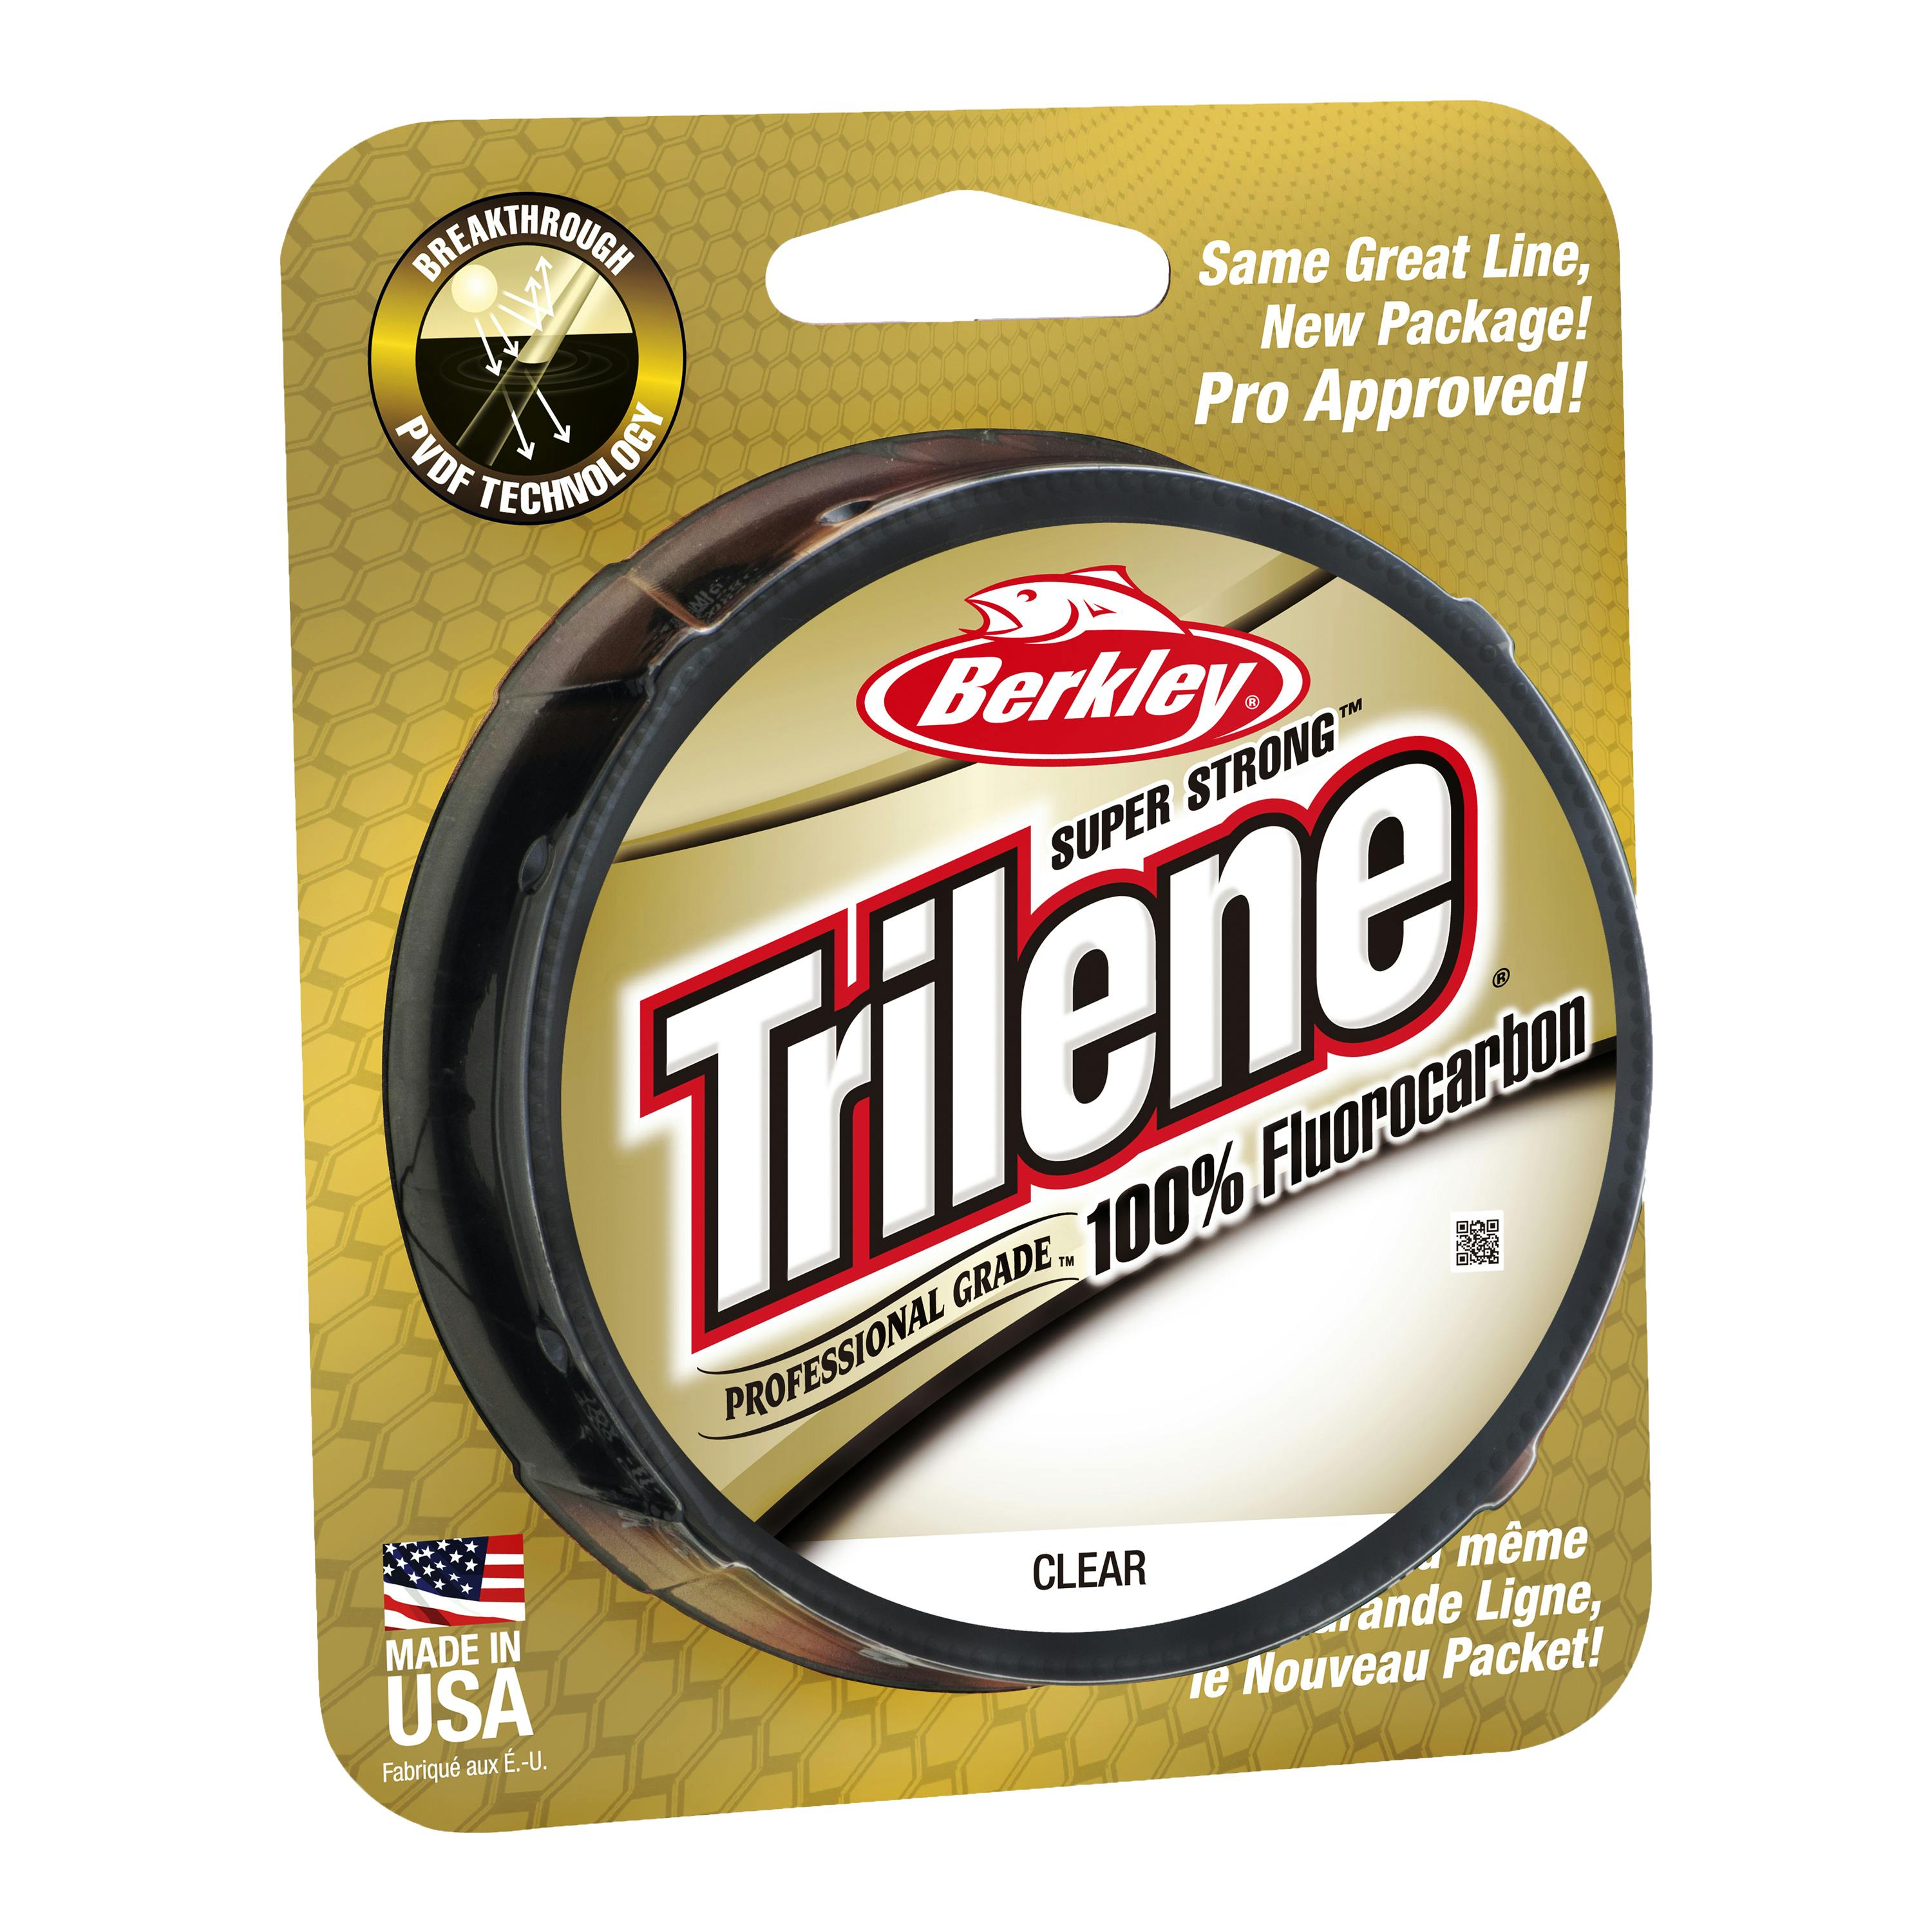 Product image of the Berkley Trilene 100% Fluorocarbon Line.